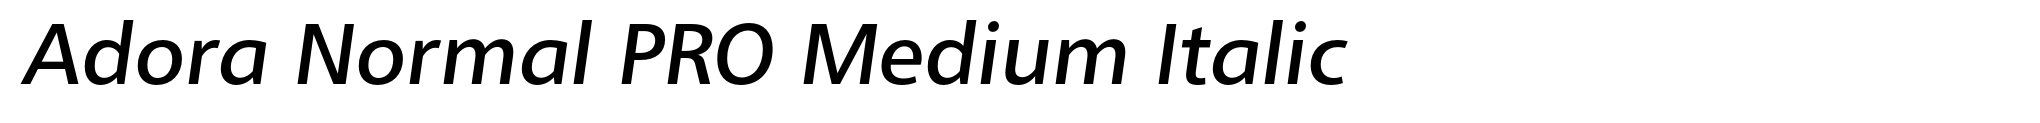 Adora Normal PRO Medium Italic image